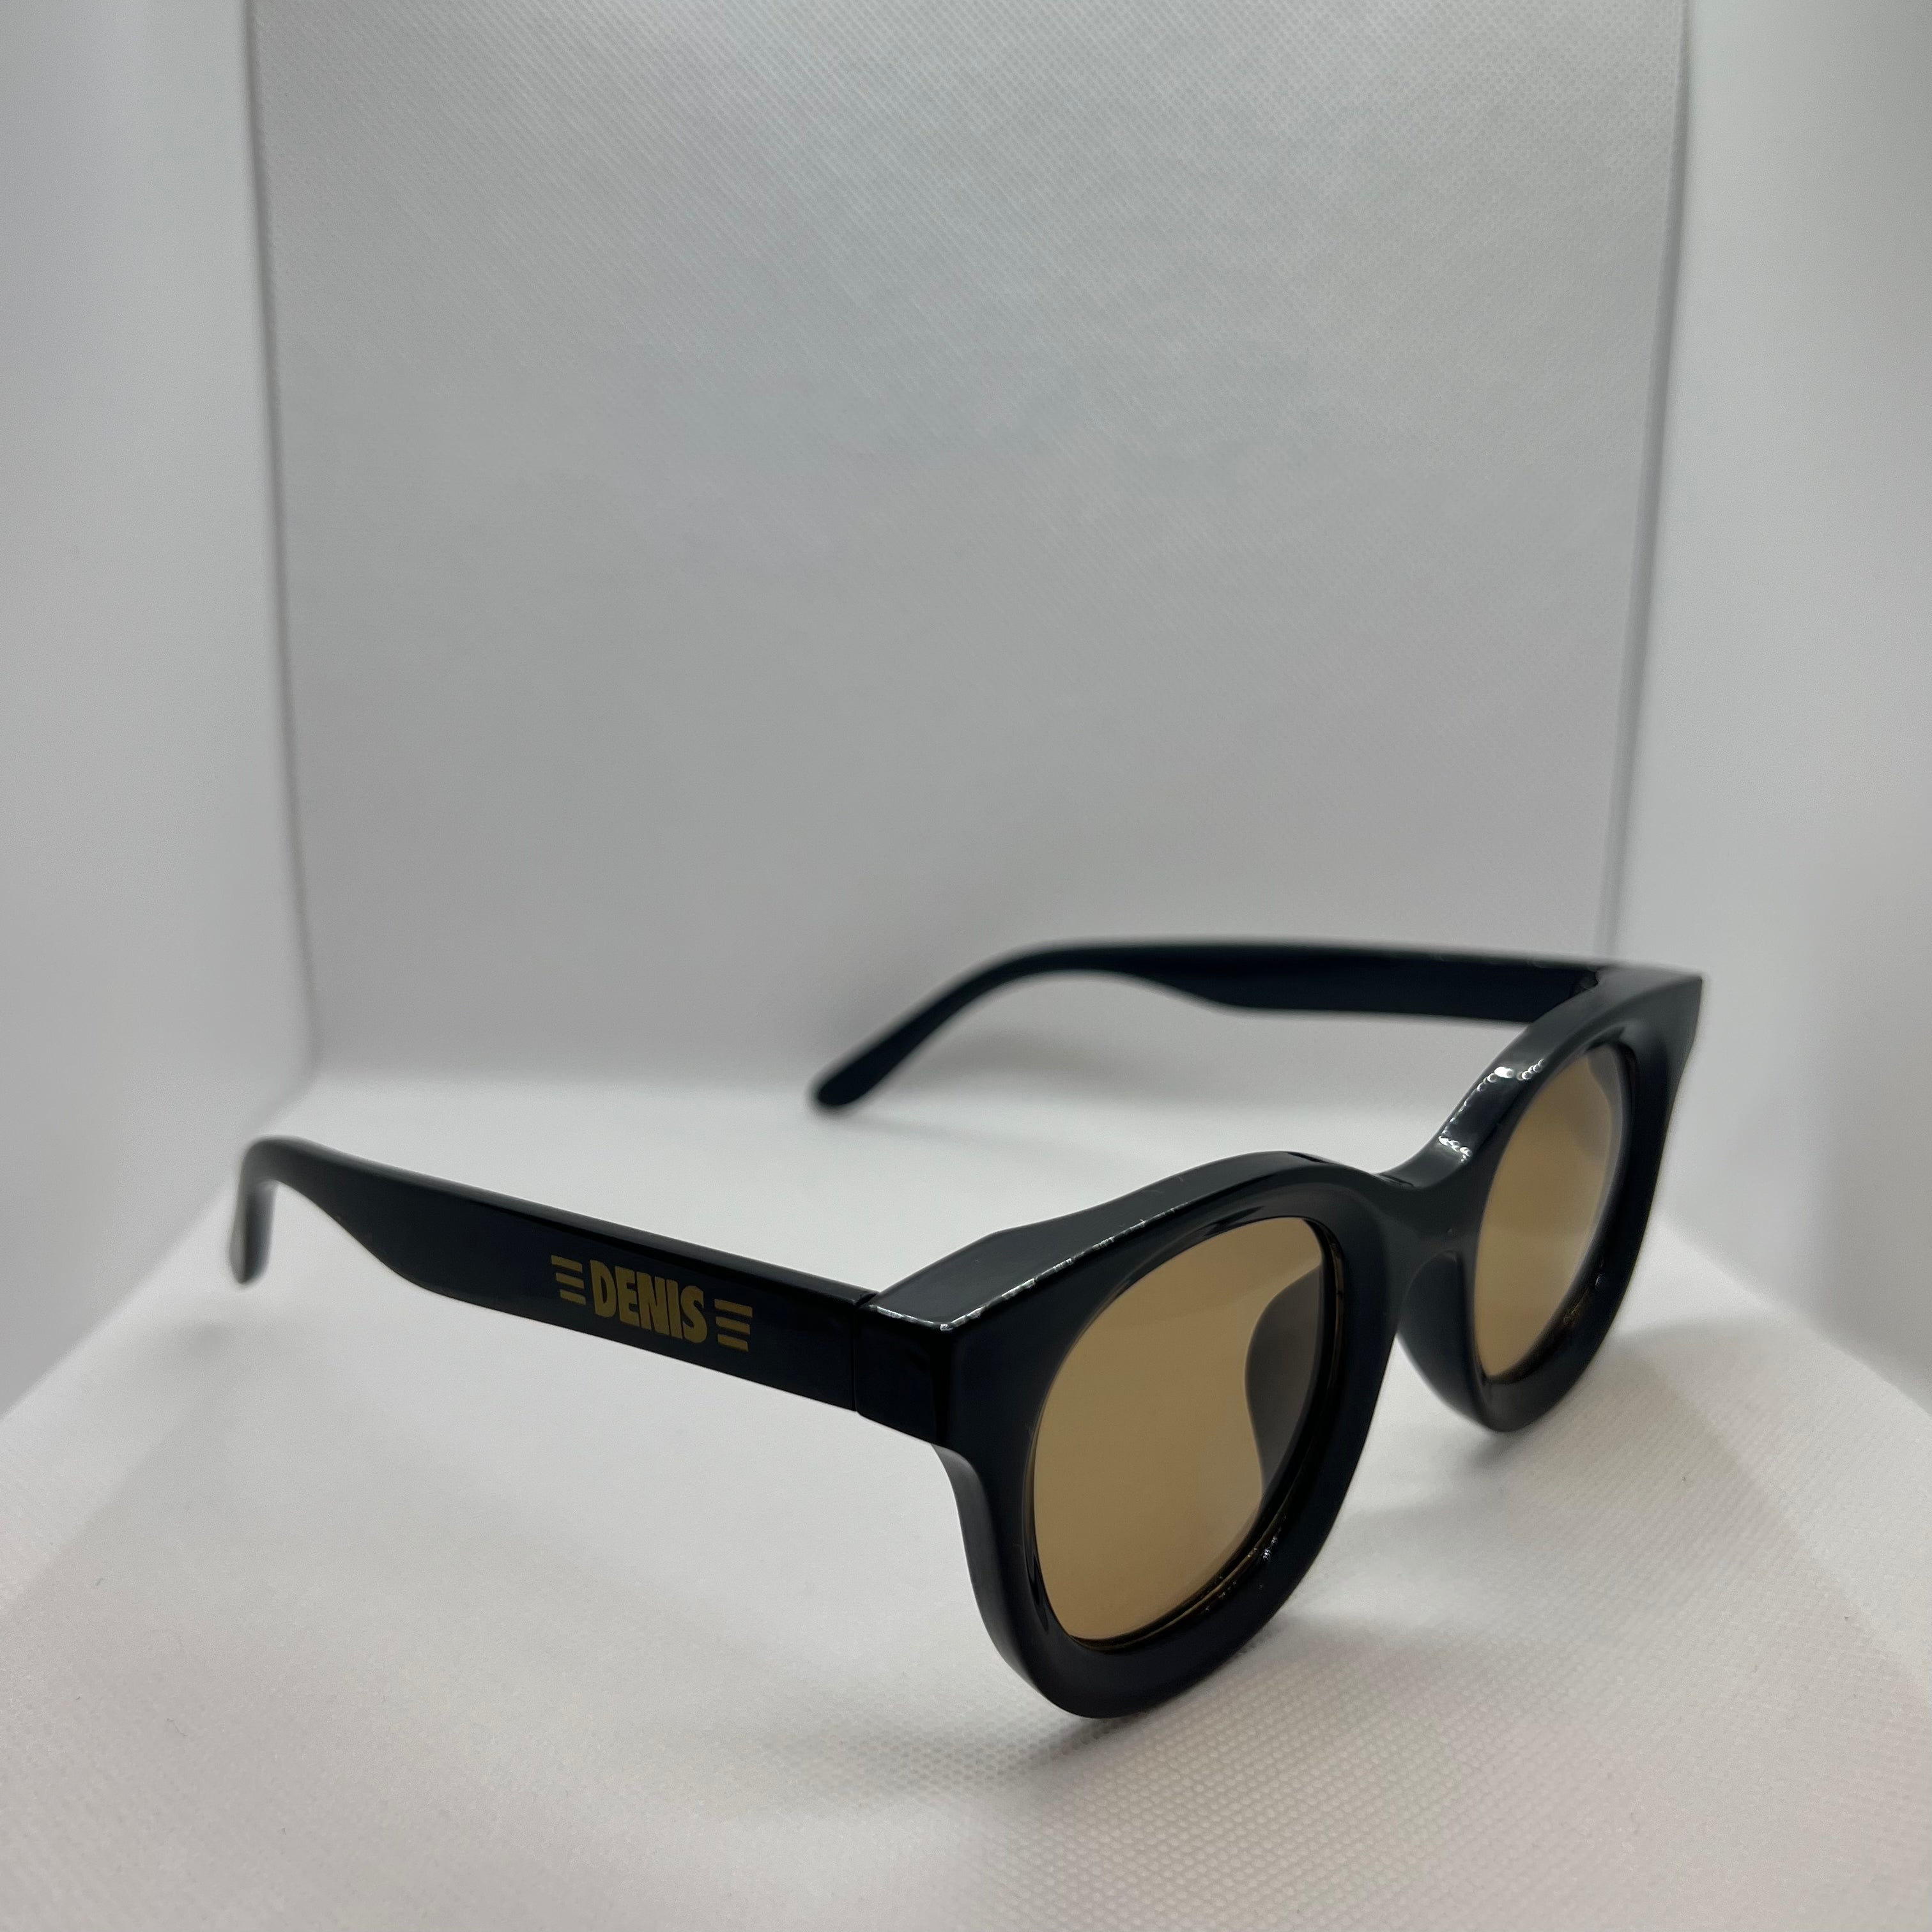 DENIS Sunglasses FAT FLAME Polarized Lenses